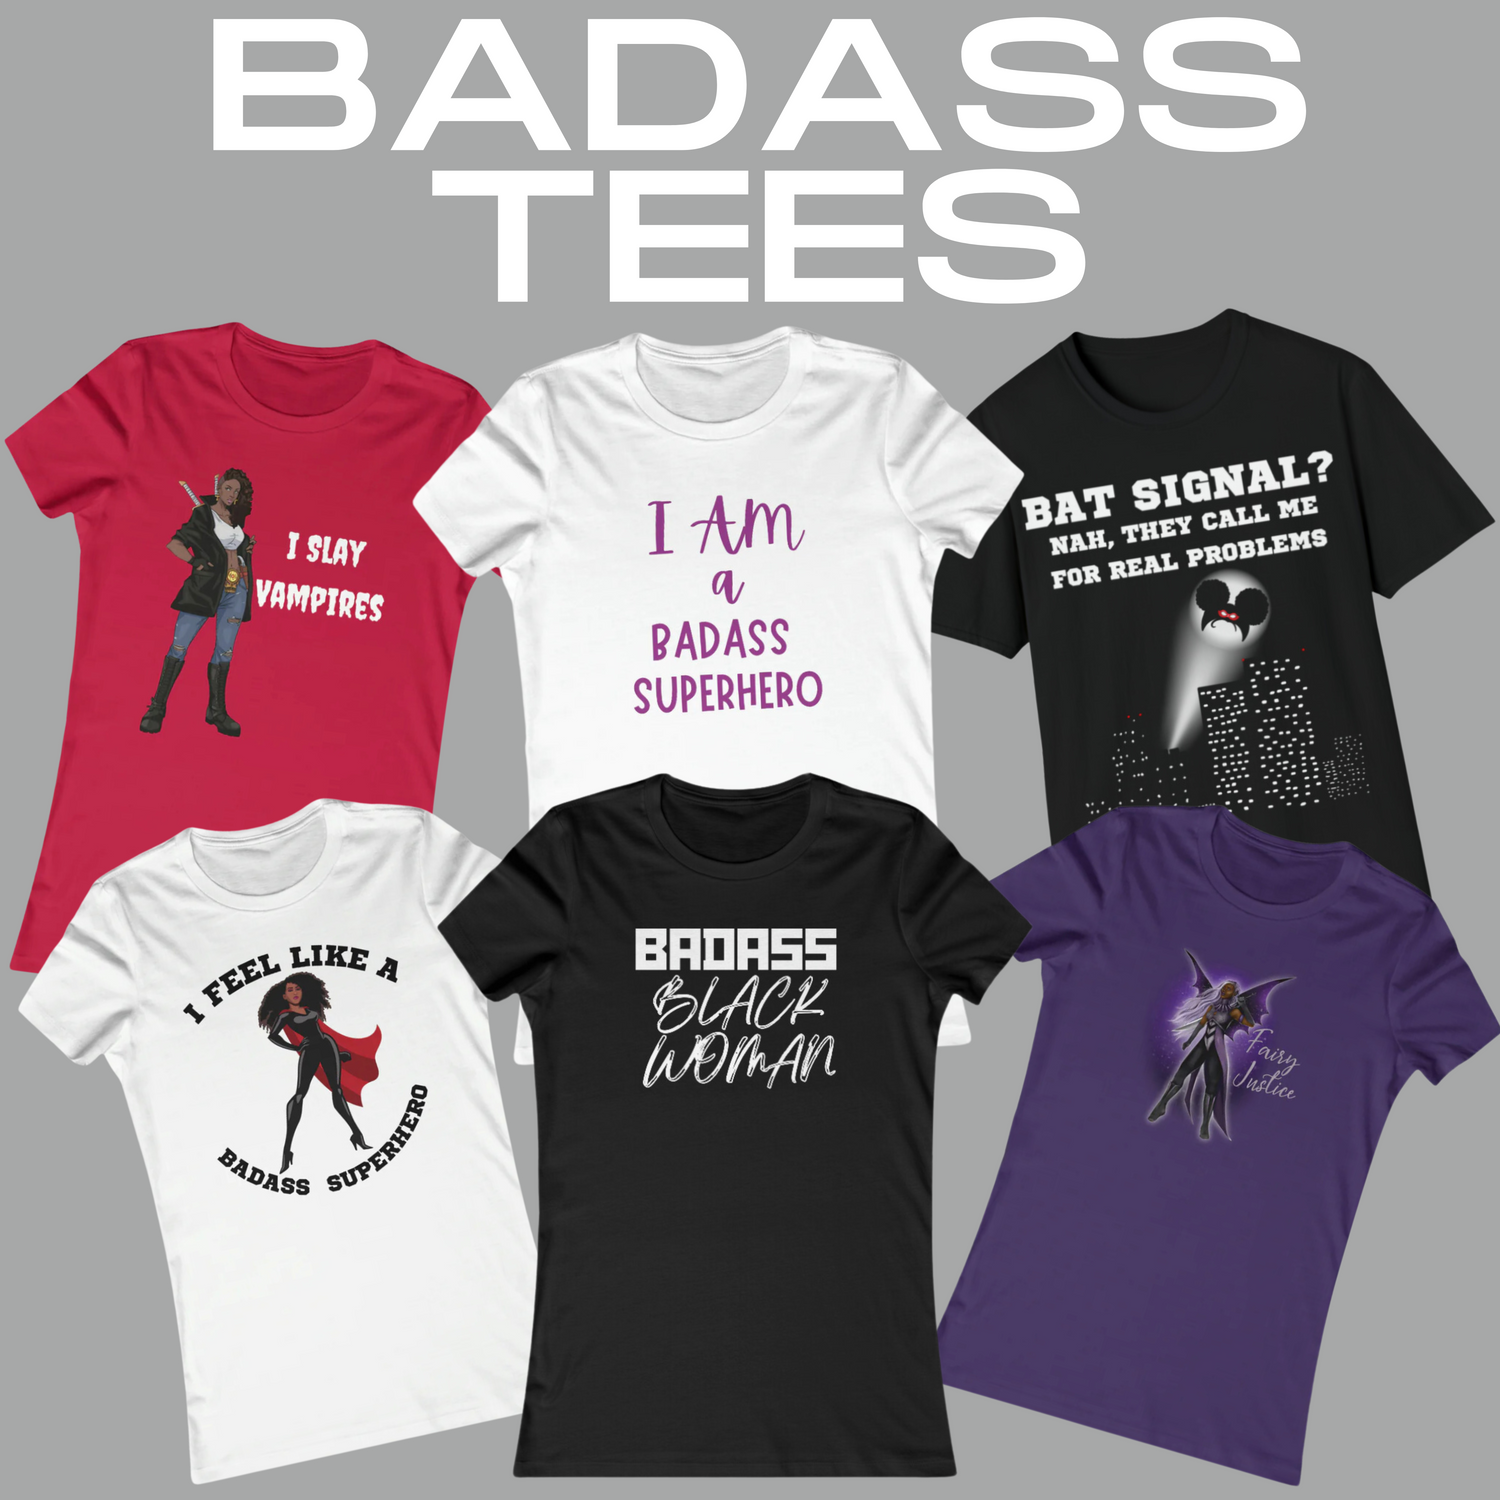 Badass Black Women T-Shirts featuring Black Women Heroines